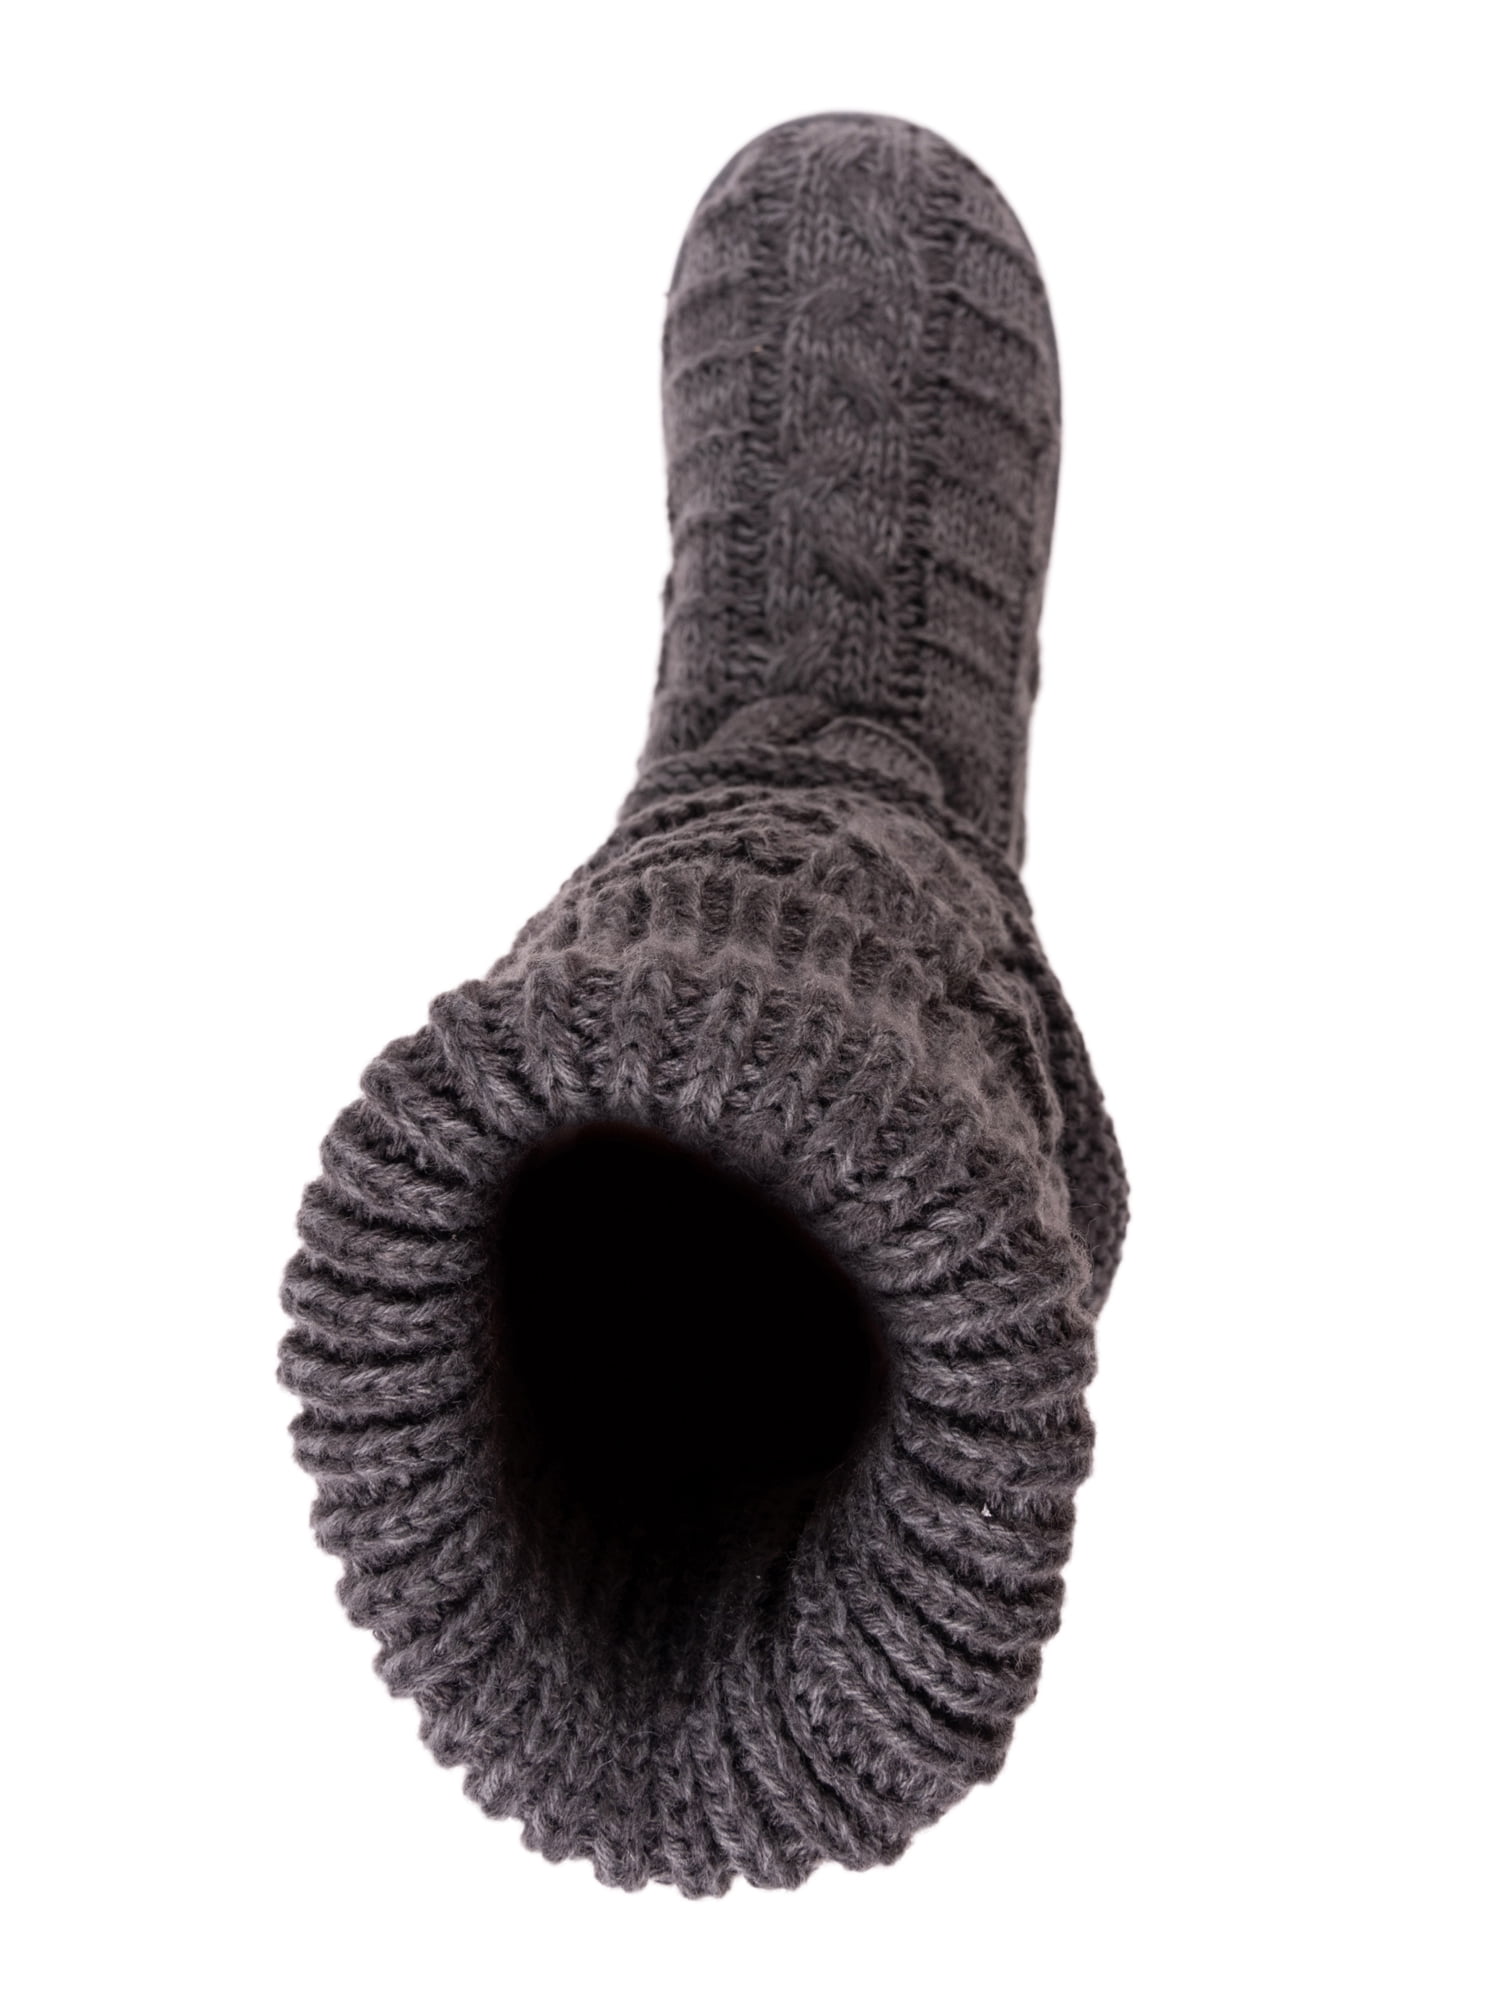 Muk Luks Shelly Marl Knit Sweater Slouch Boot (Women's)